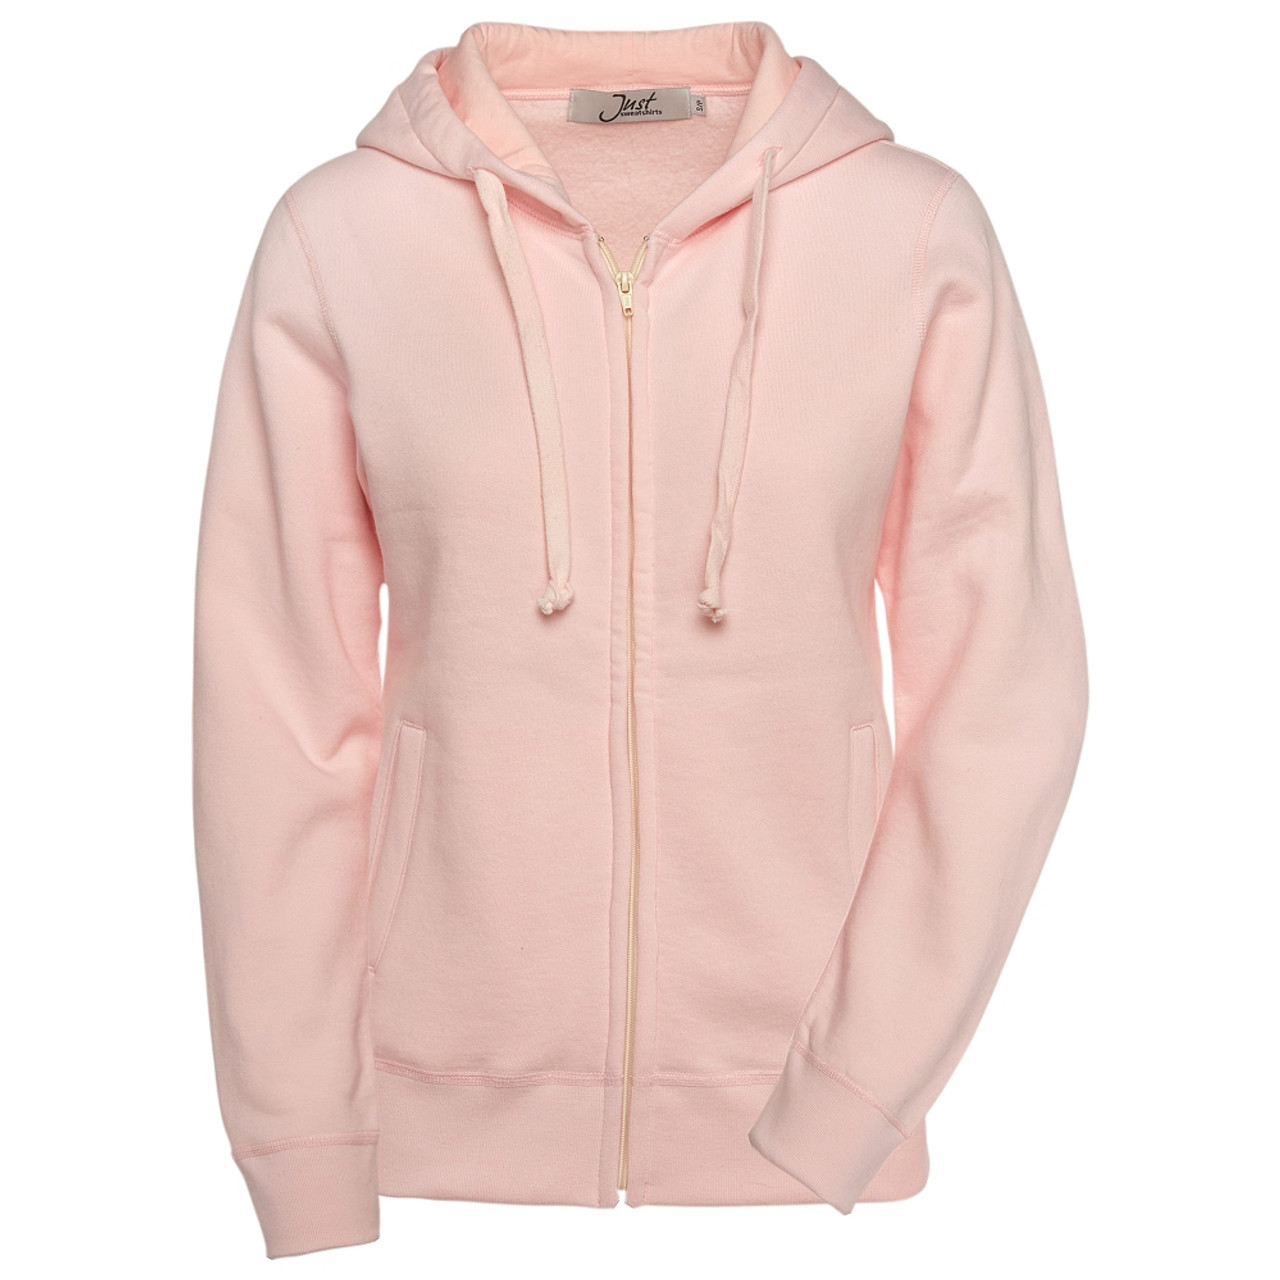 Ultra Soft Ladies Zipper Hoodie Pale Pink 100% Cotton